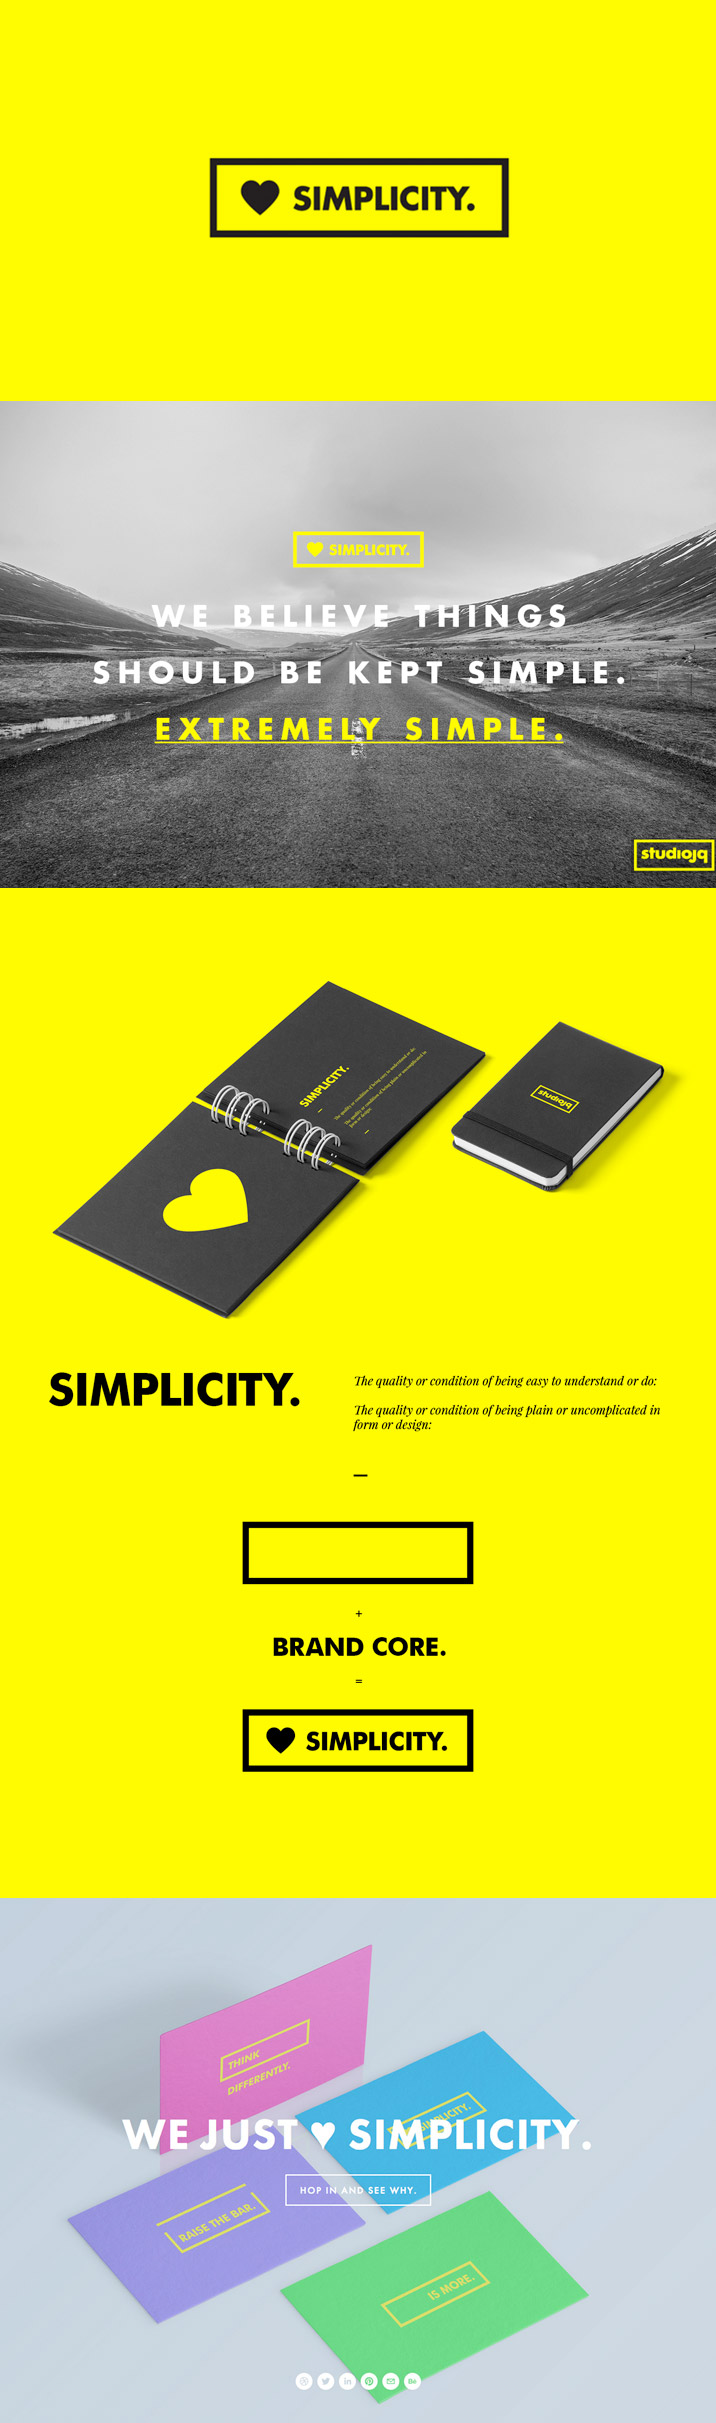 12-simplicity